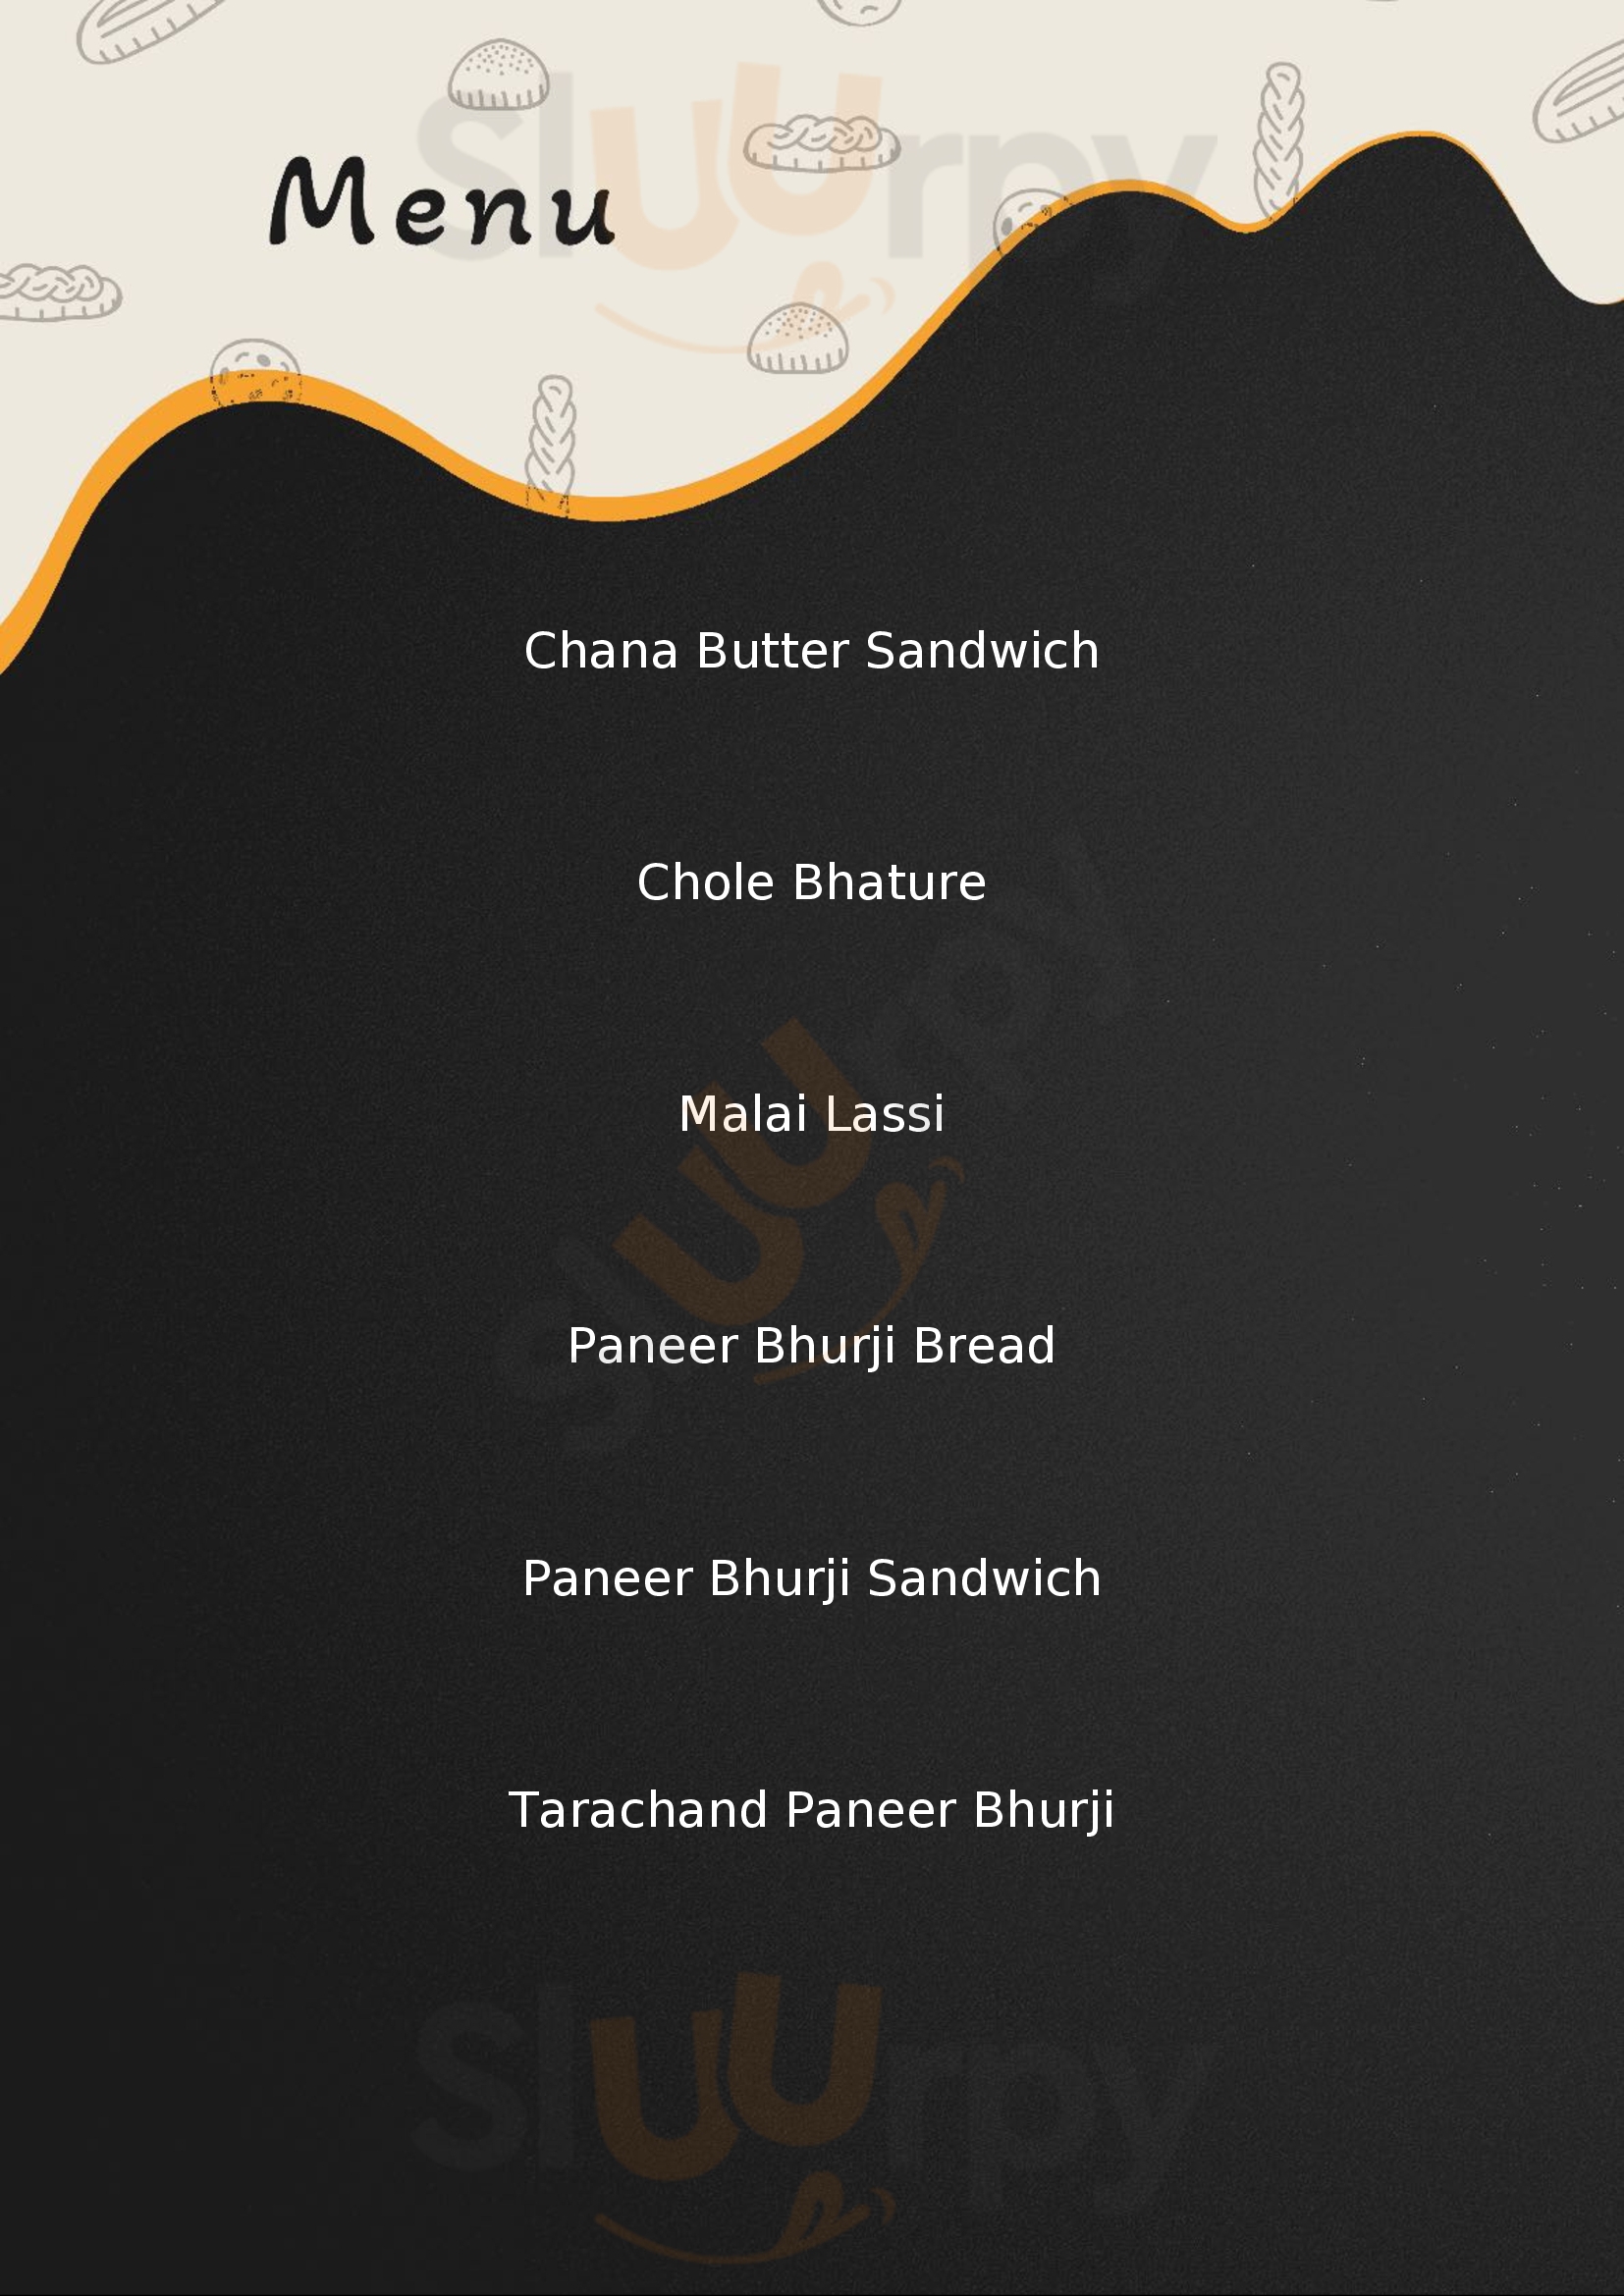 Tara Chand Paneer Bhurji Amritsar Menu - 1